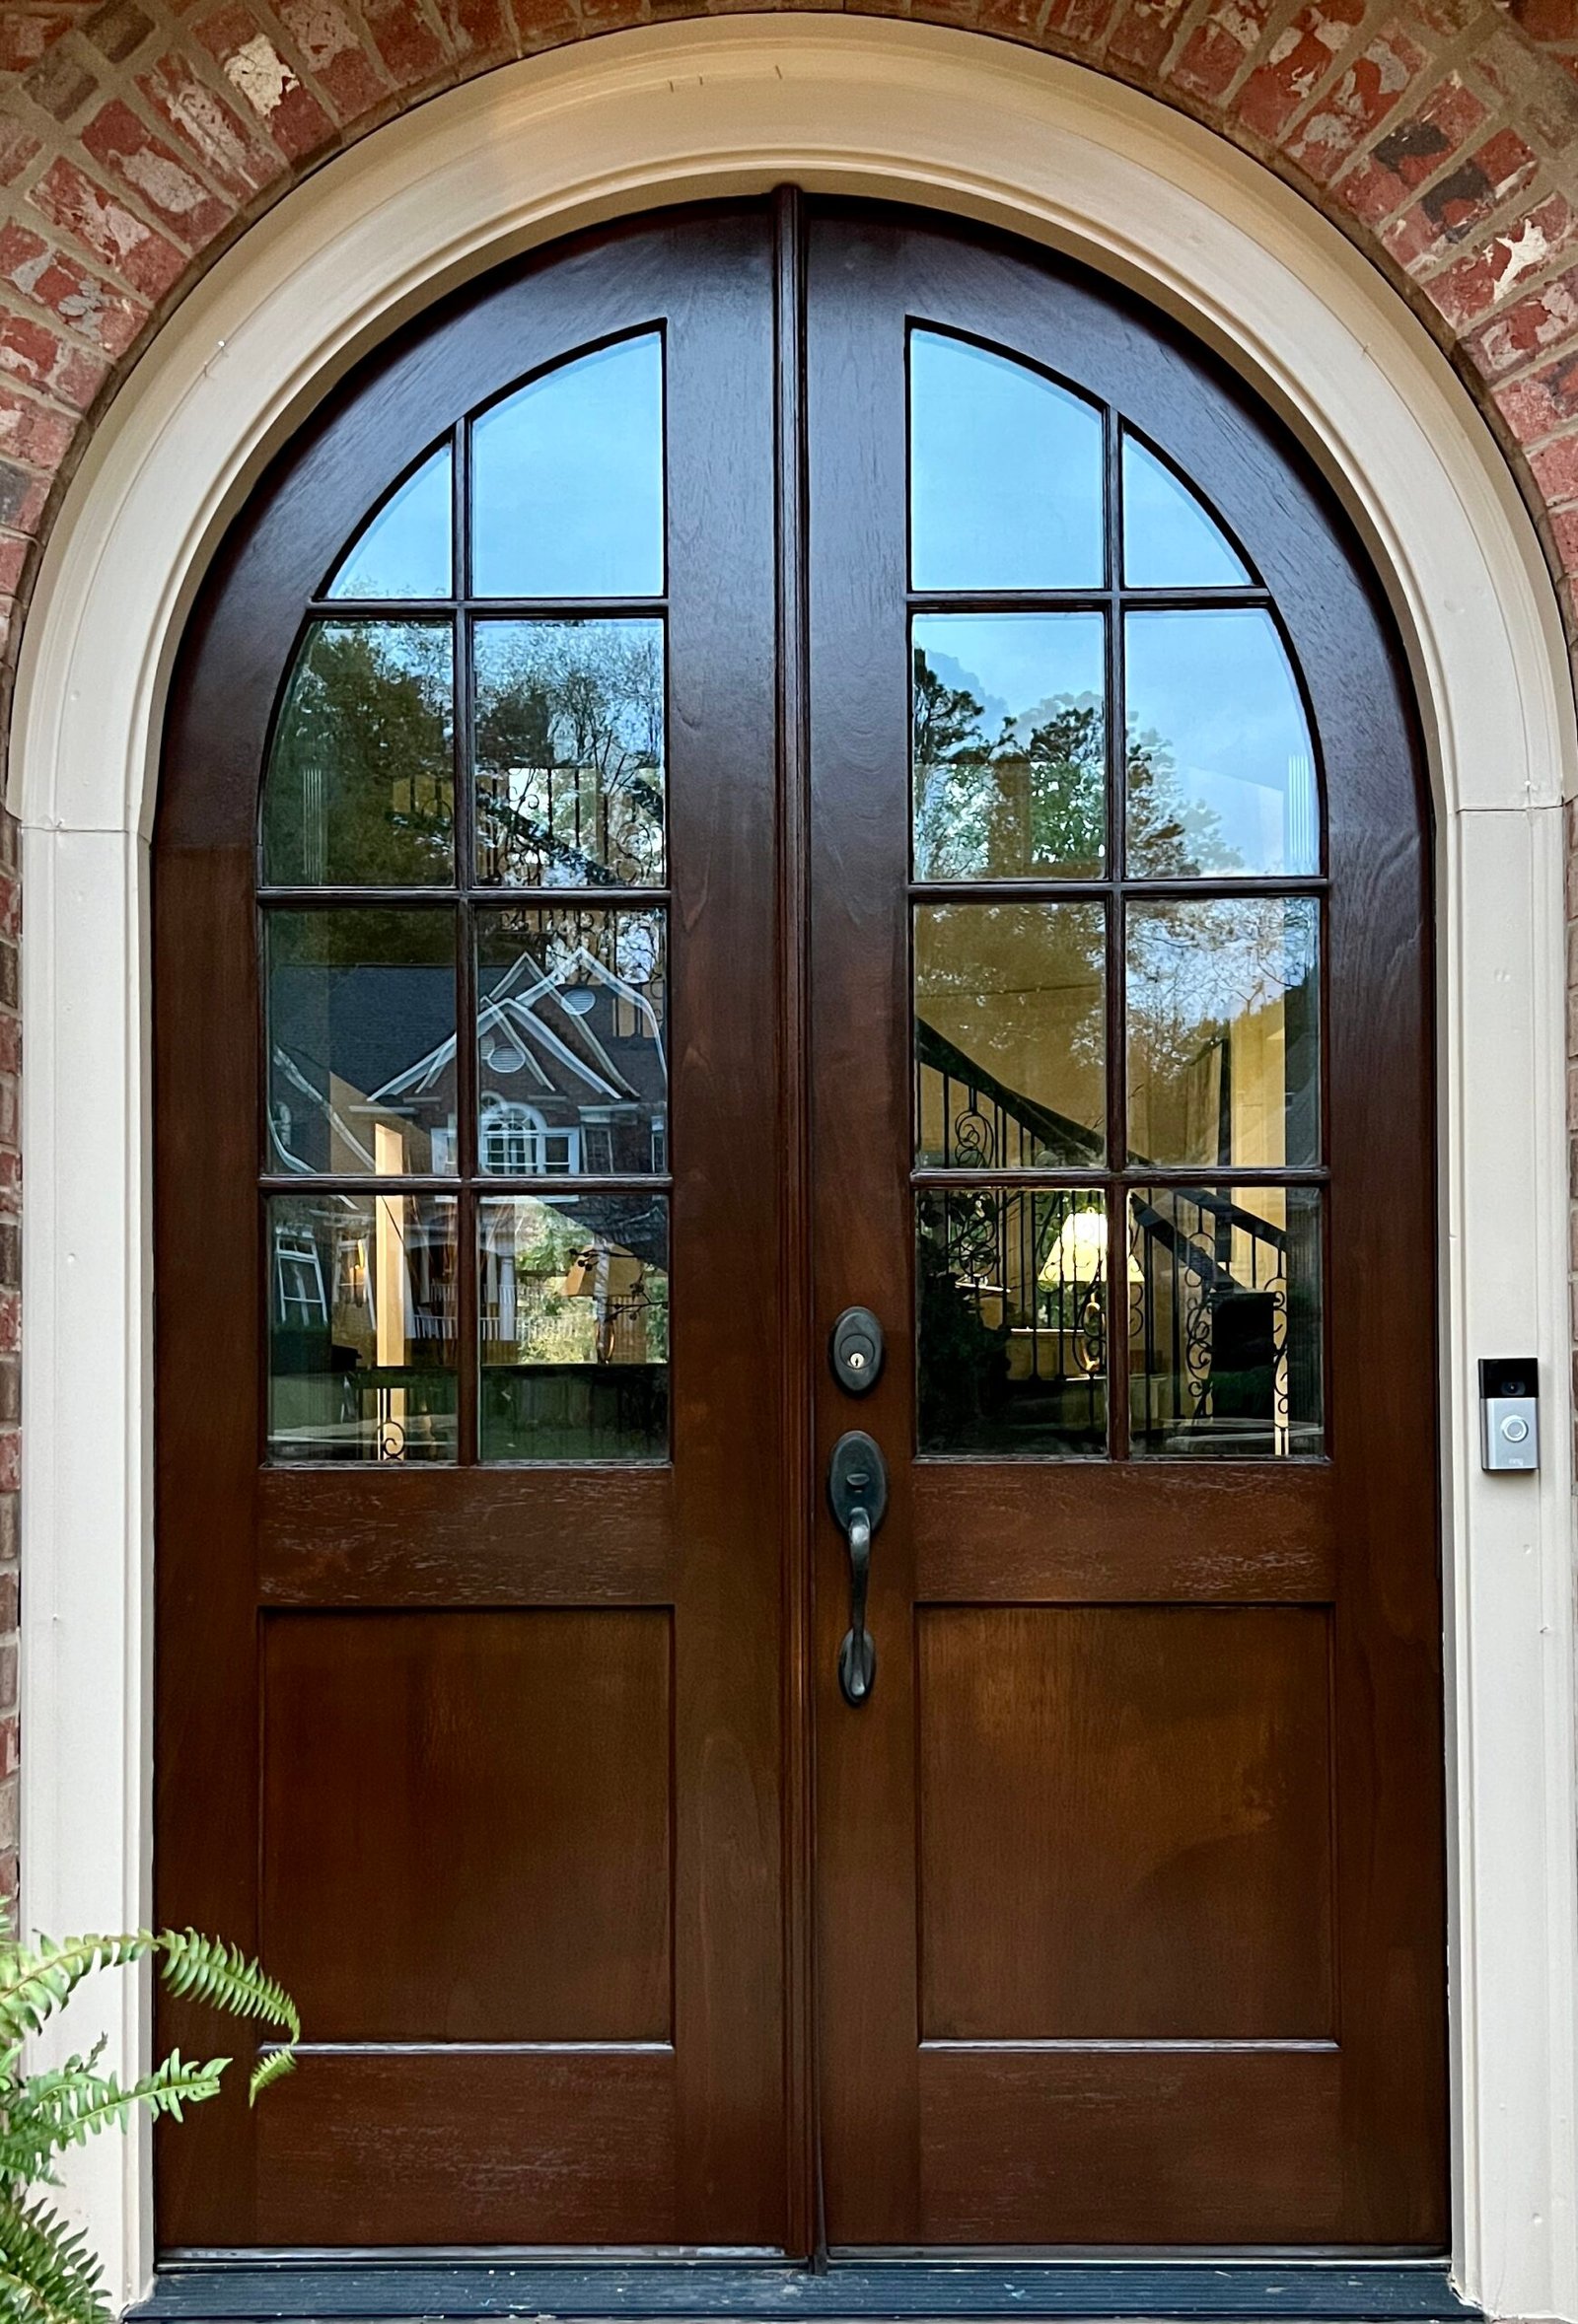 Restored wooden door with a fresh, renewed finish